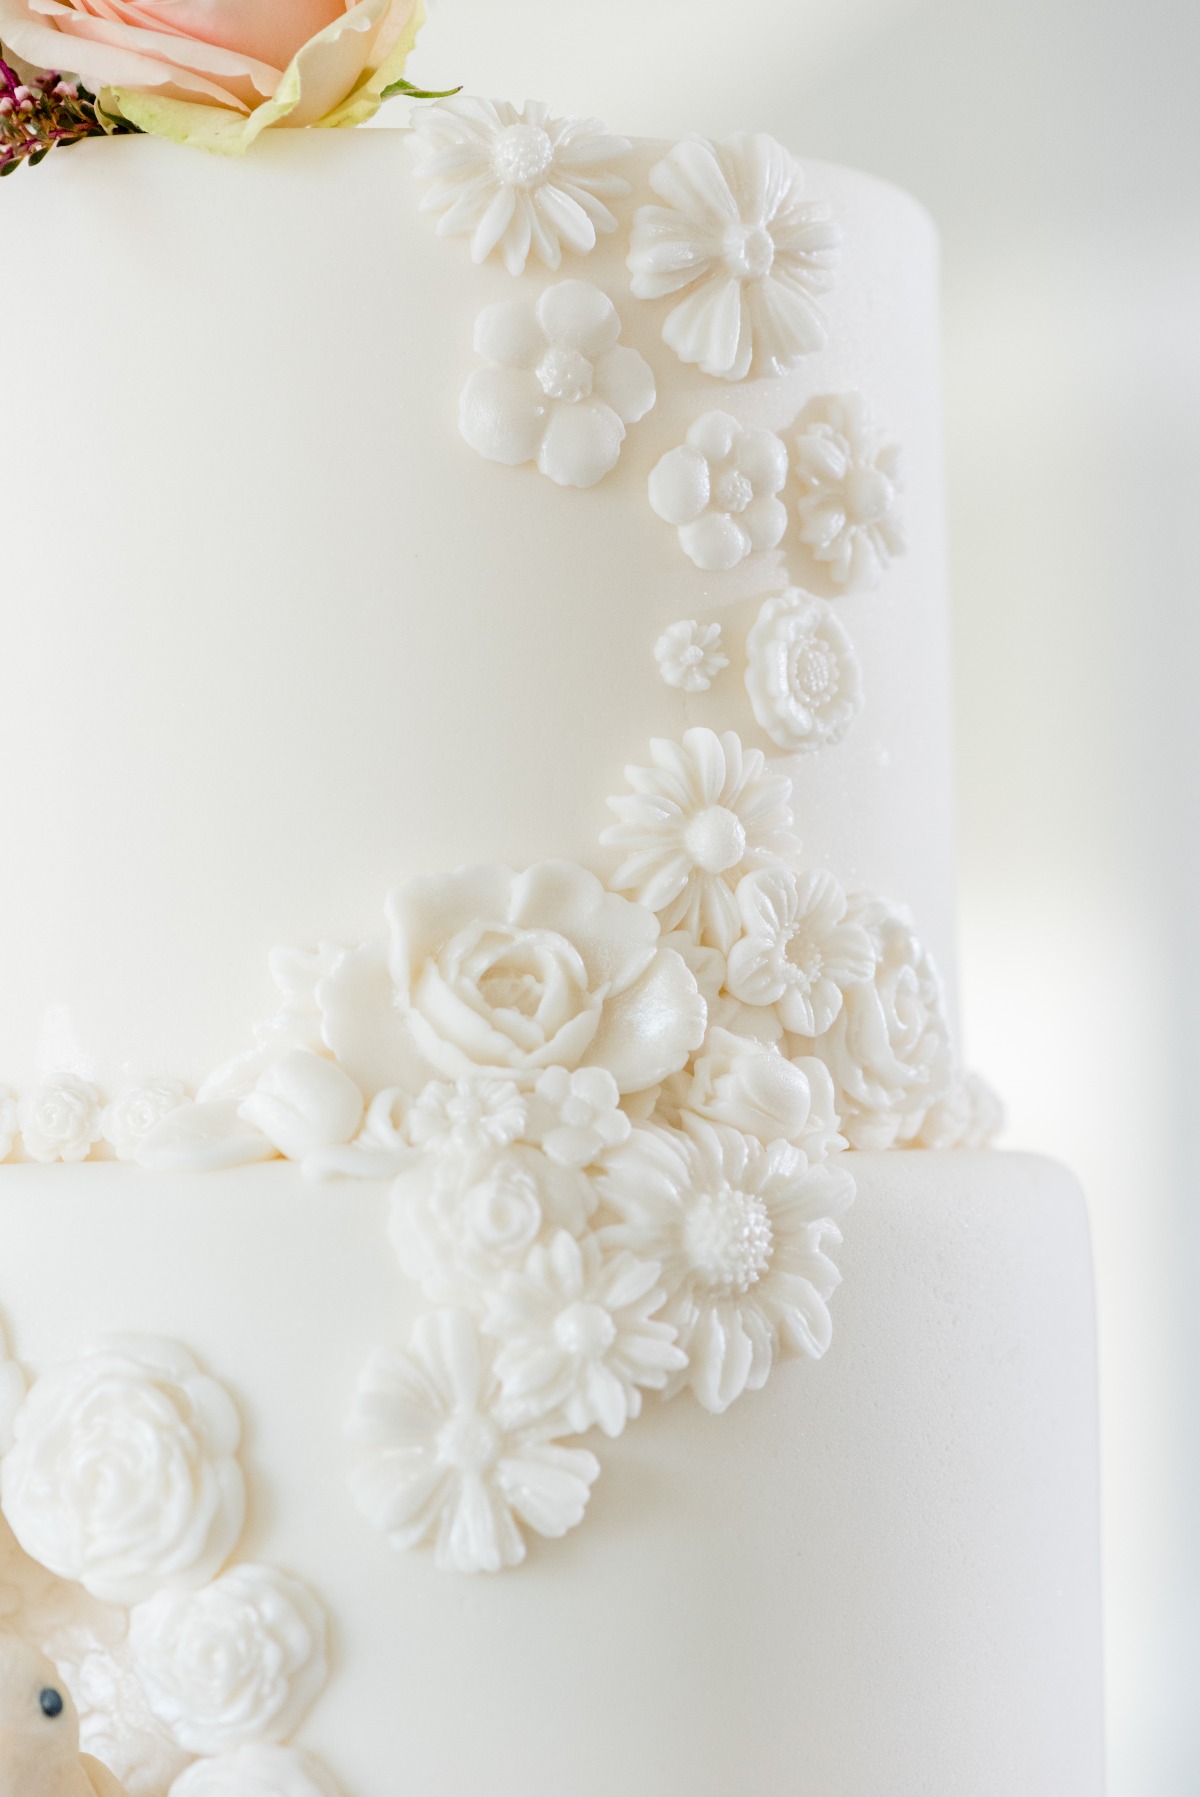 intricate white wedding cake decoration